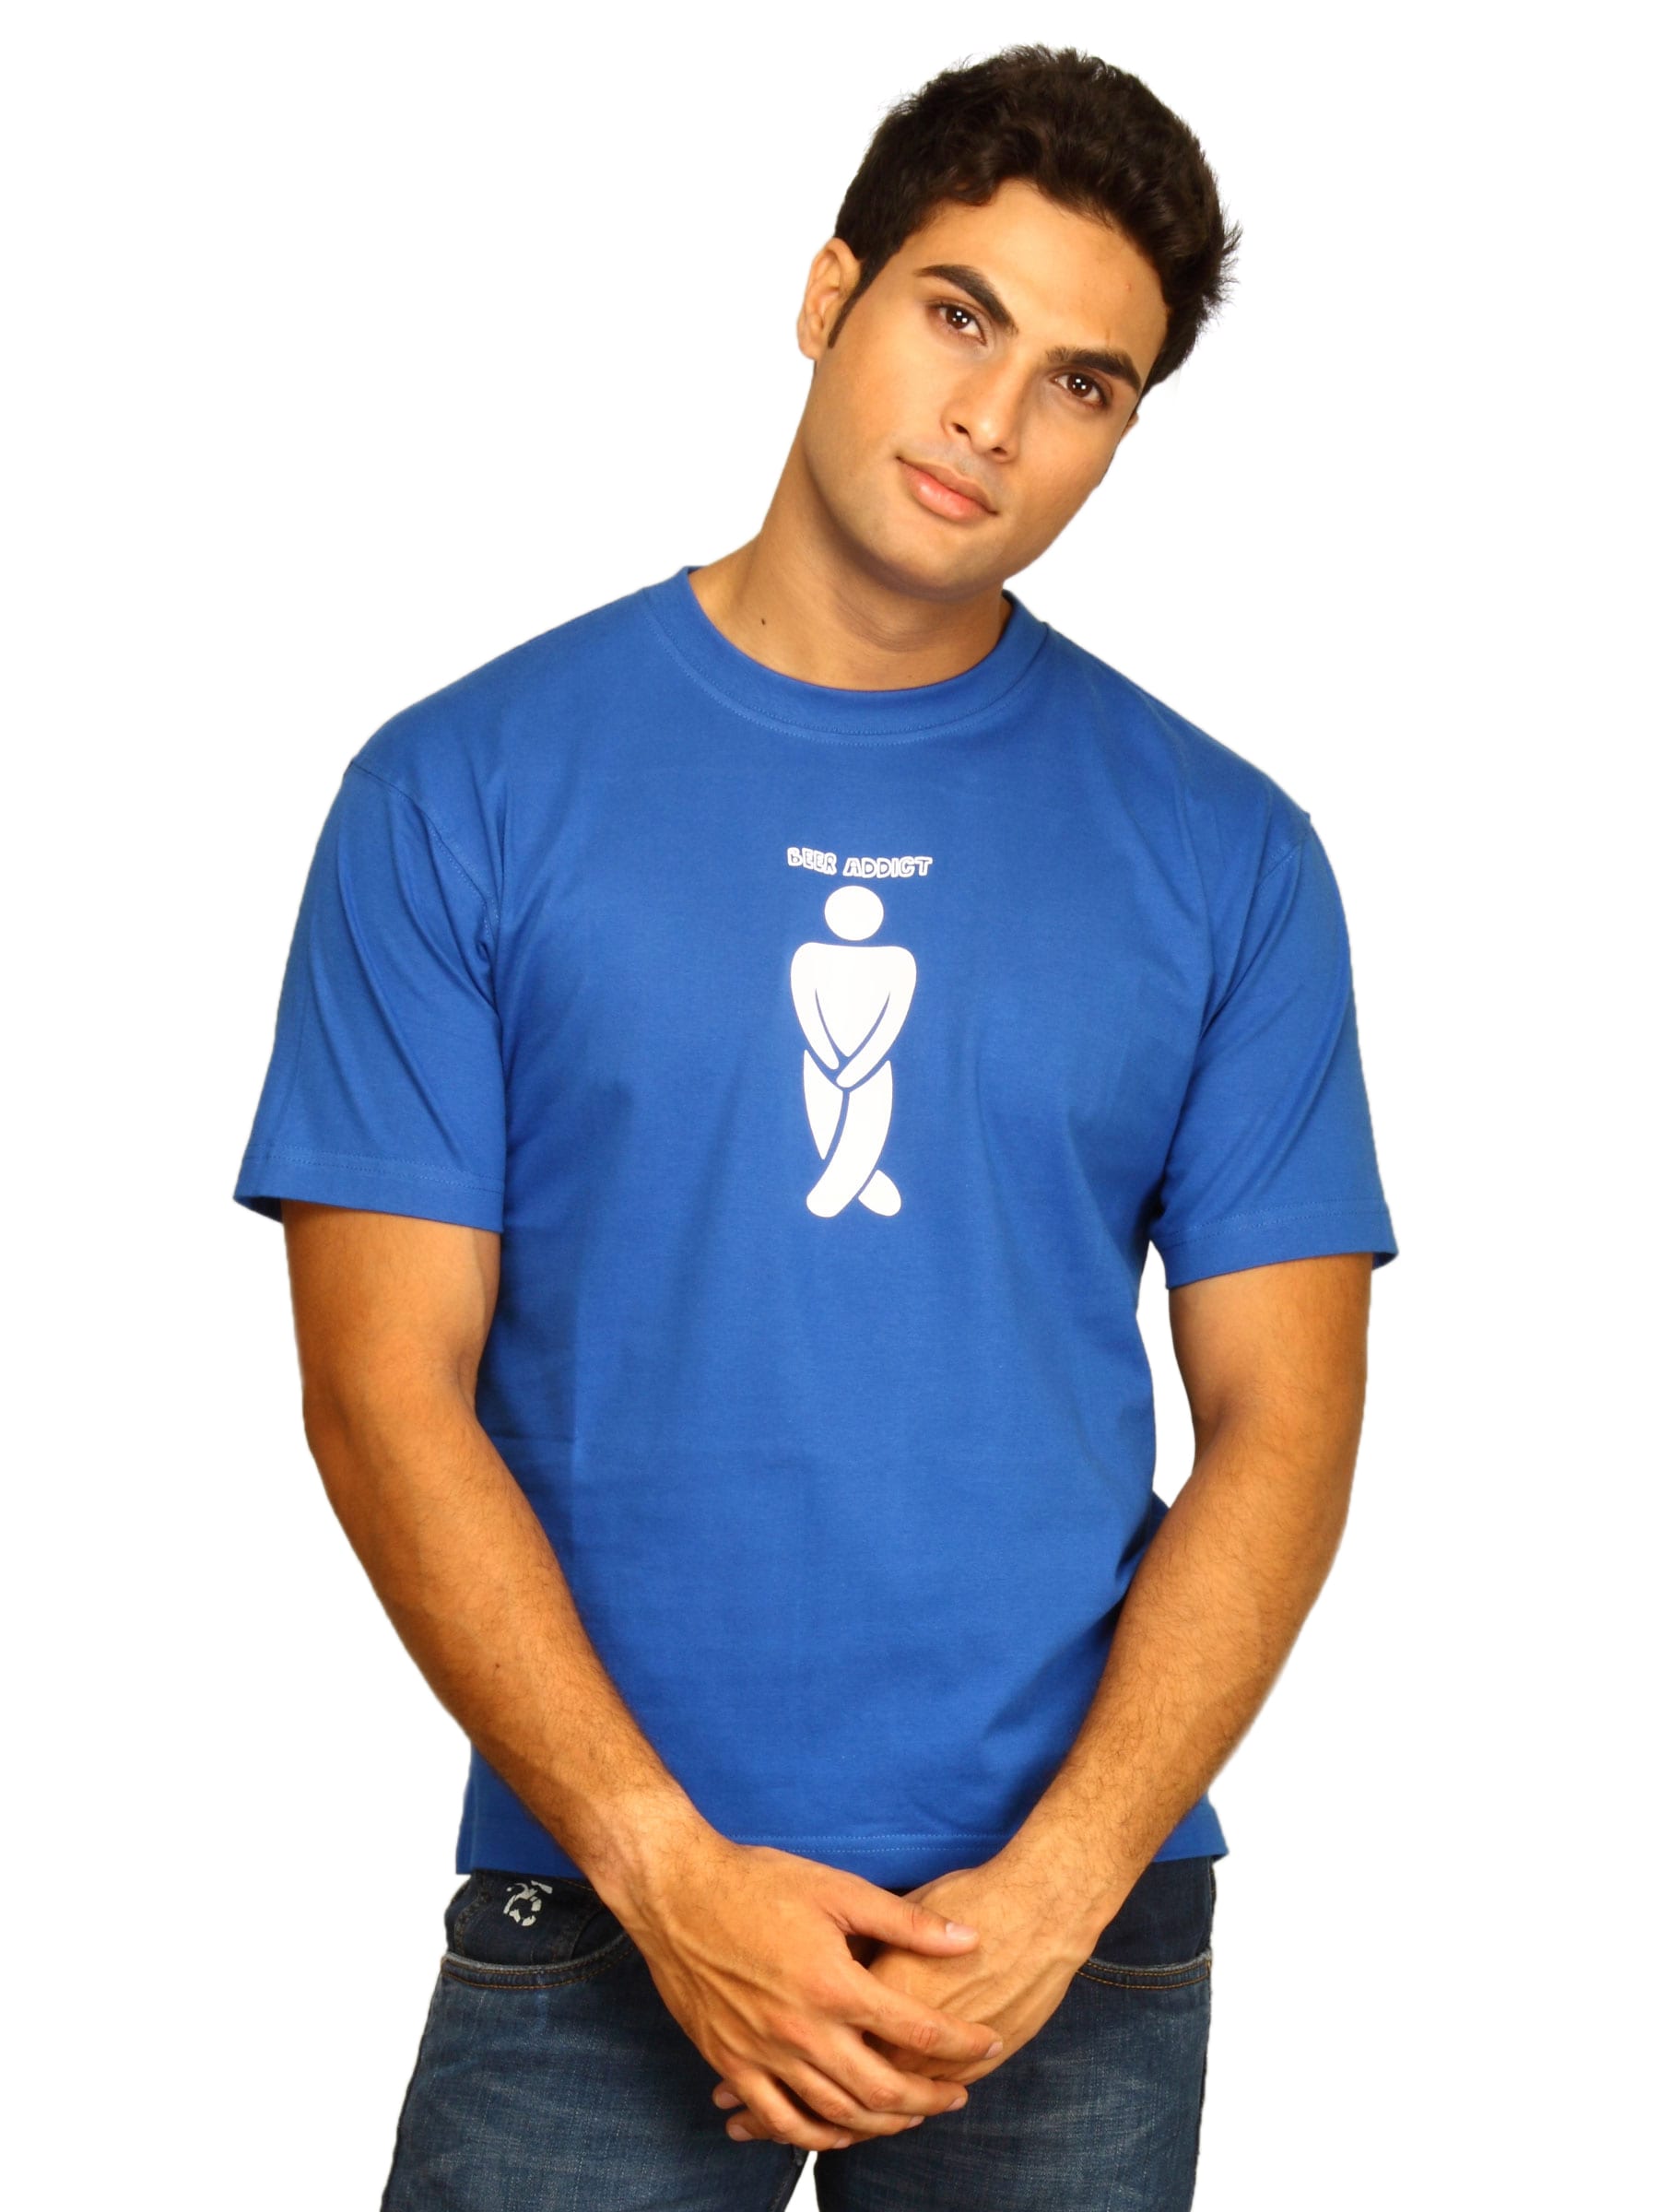 Tantra Men's Beer Addict Blue T-shirt